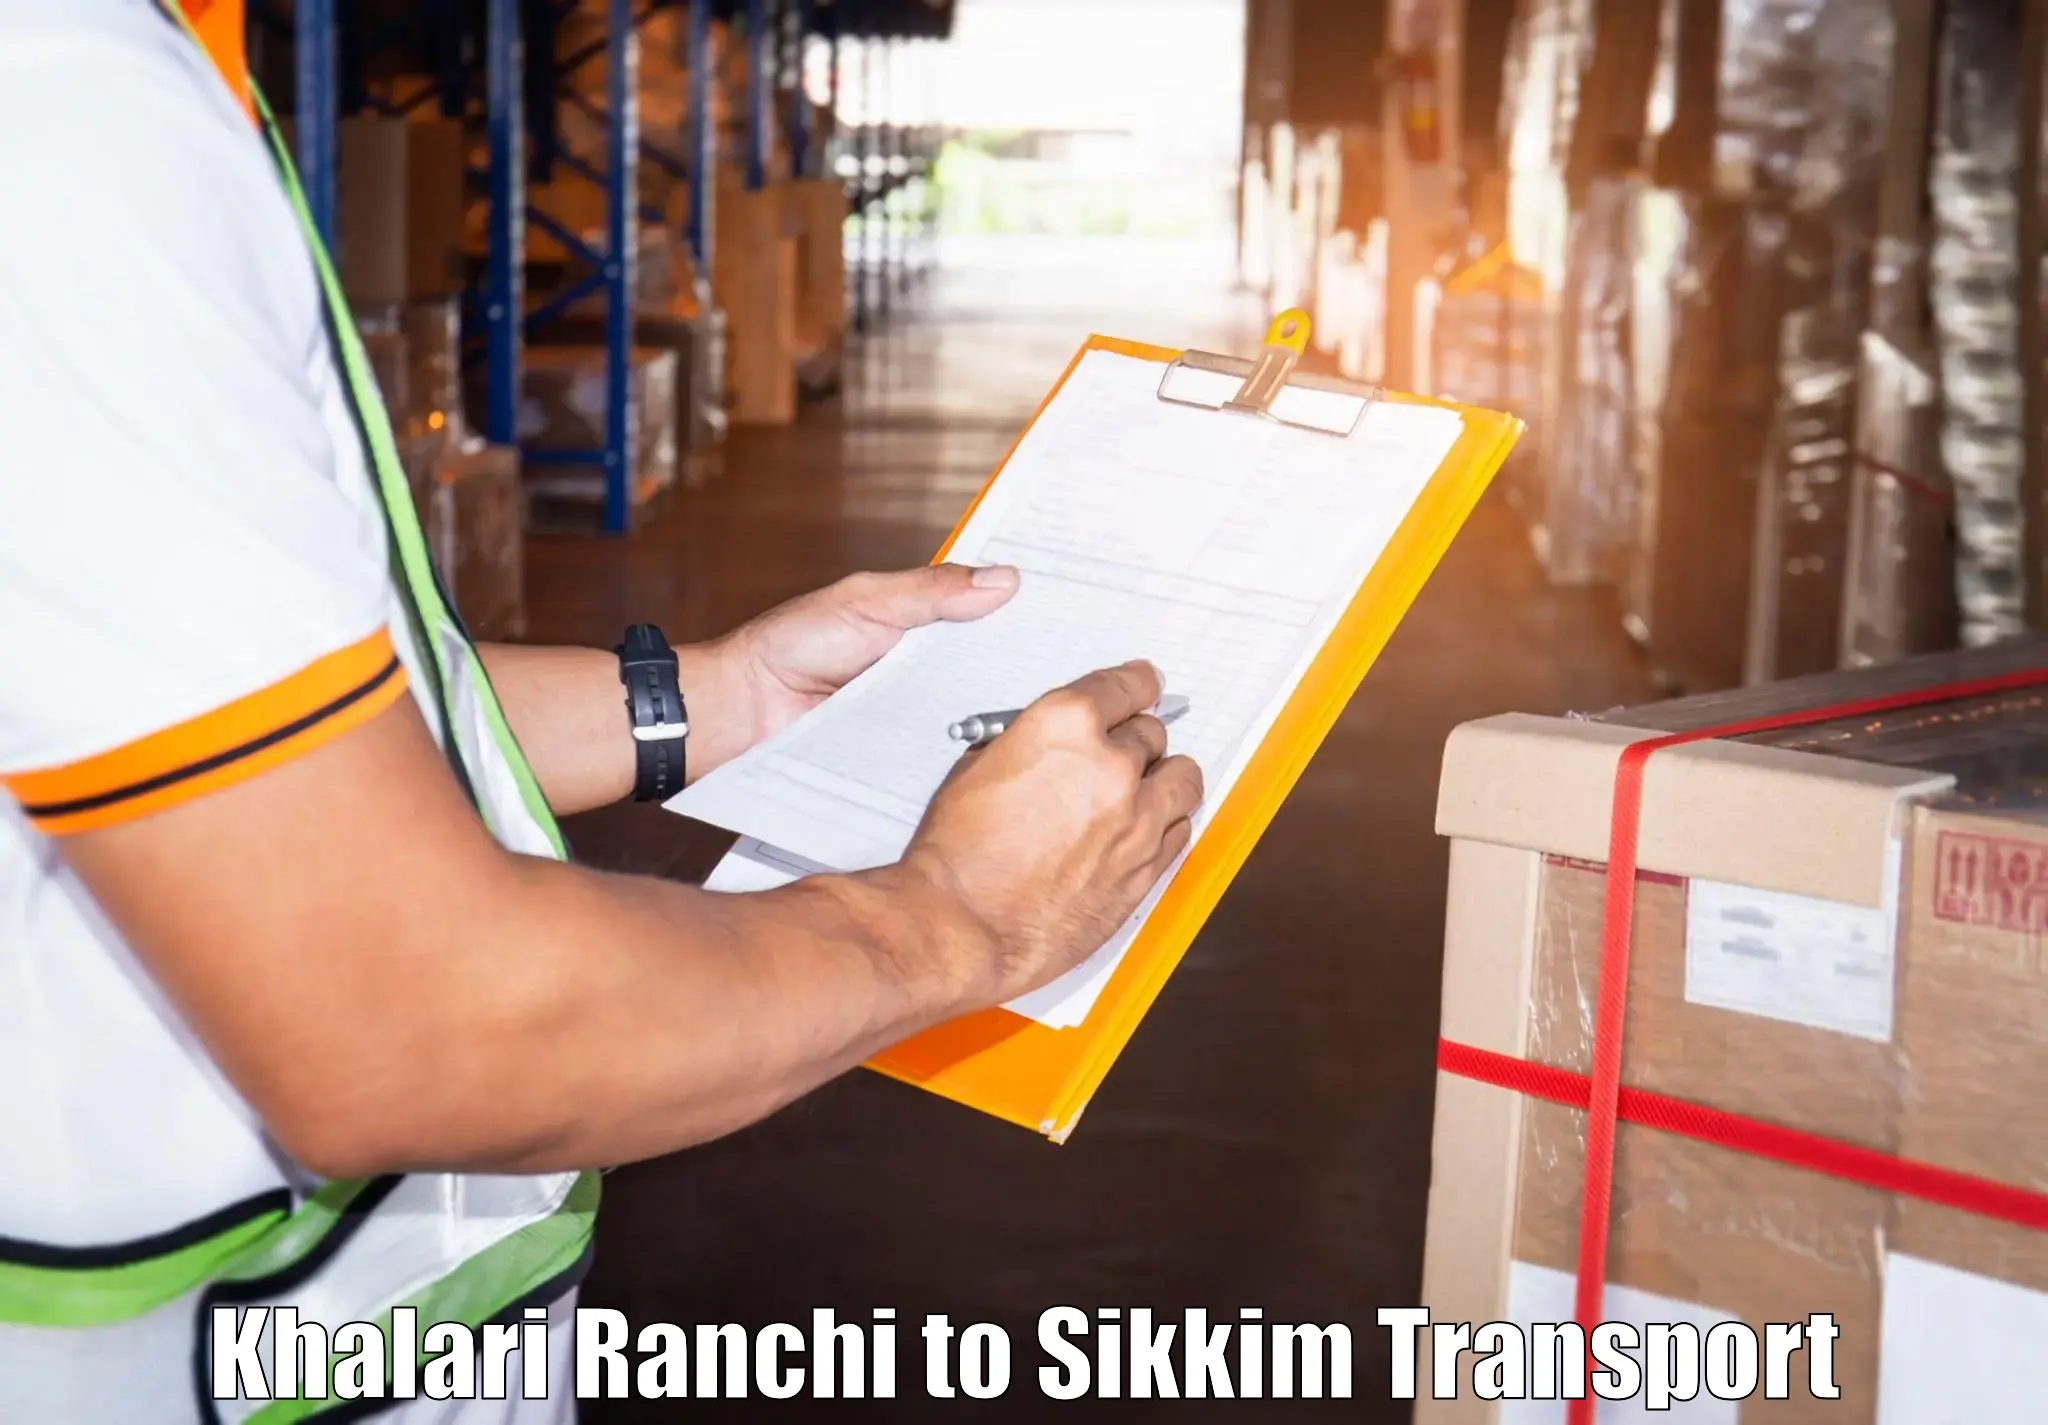 Nearest transport service Khalari Ranchi to Pelling